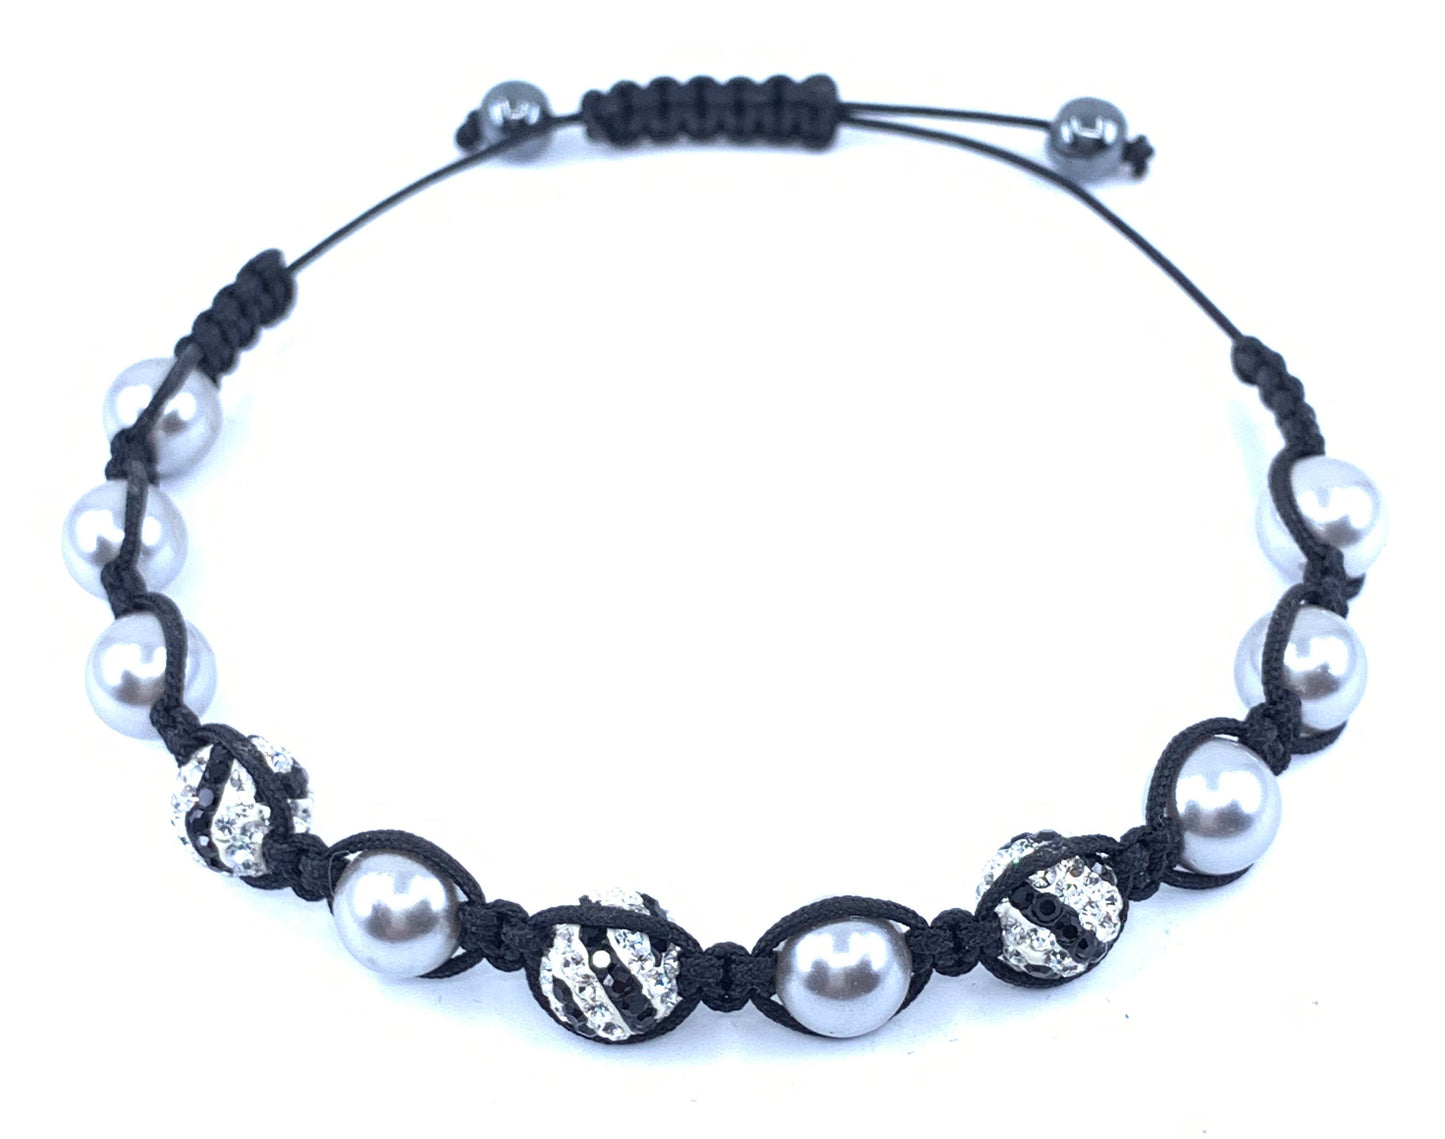 Mystical Rosary Beads Bracelet